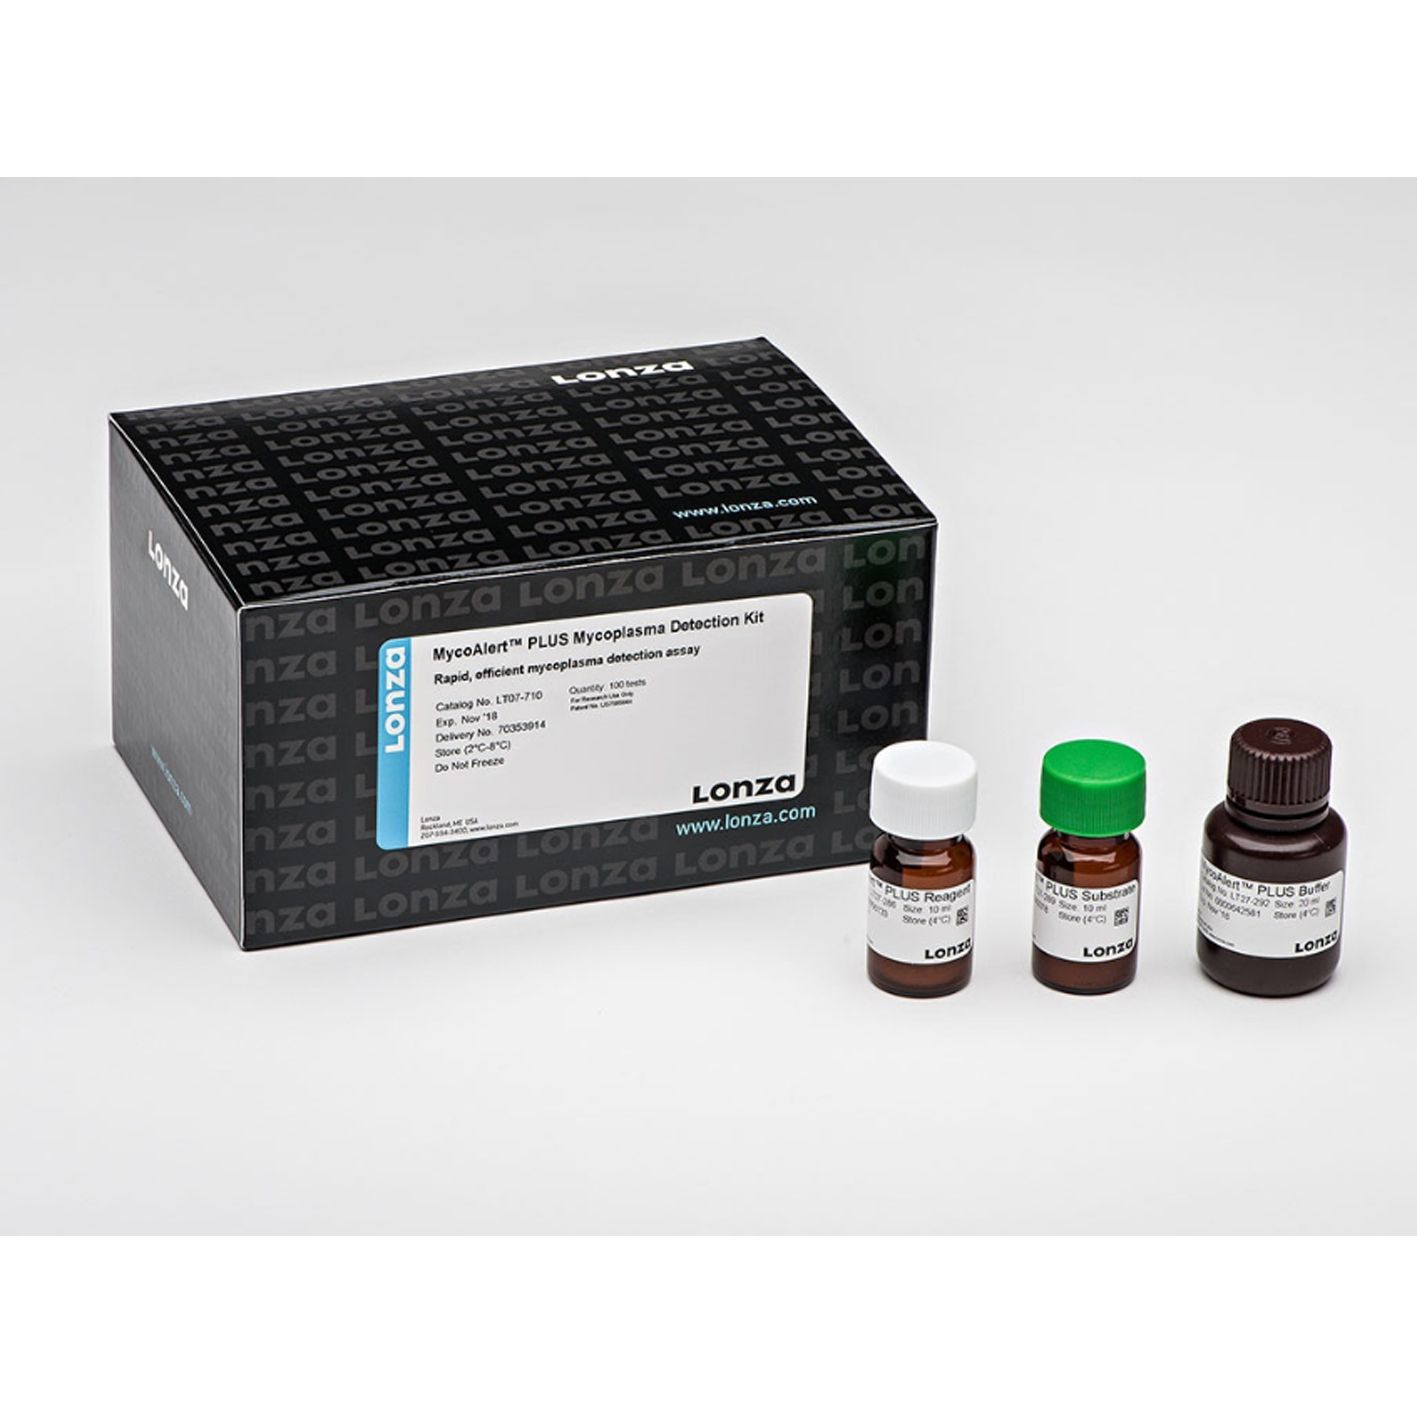 LONZA LT07-710 支原体检测试剂盒MycoAlertTM PLUS Mycoplasma Detection Kit (100 Tests)